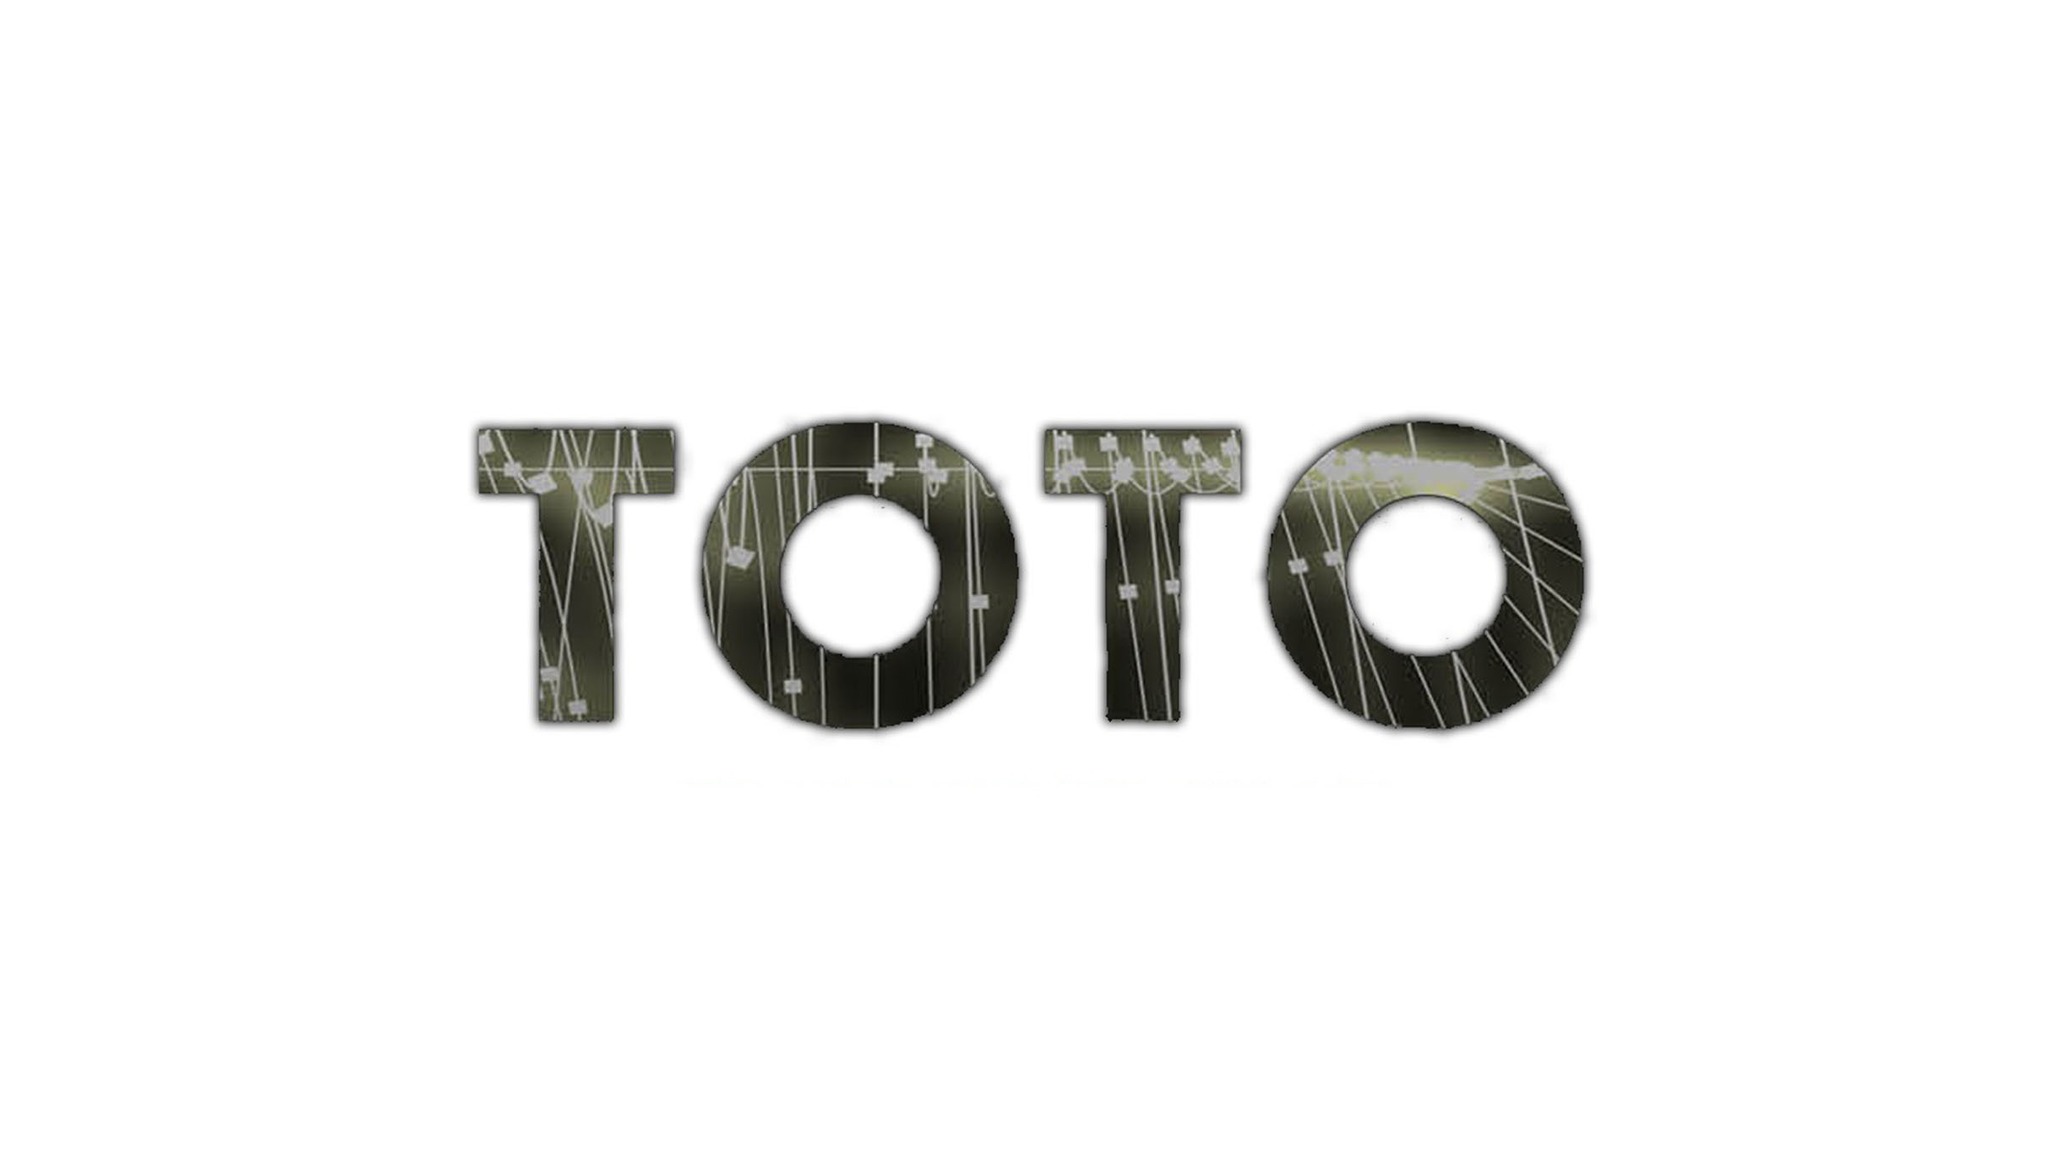 Toto 40 Trips Around The Sun